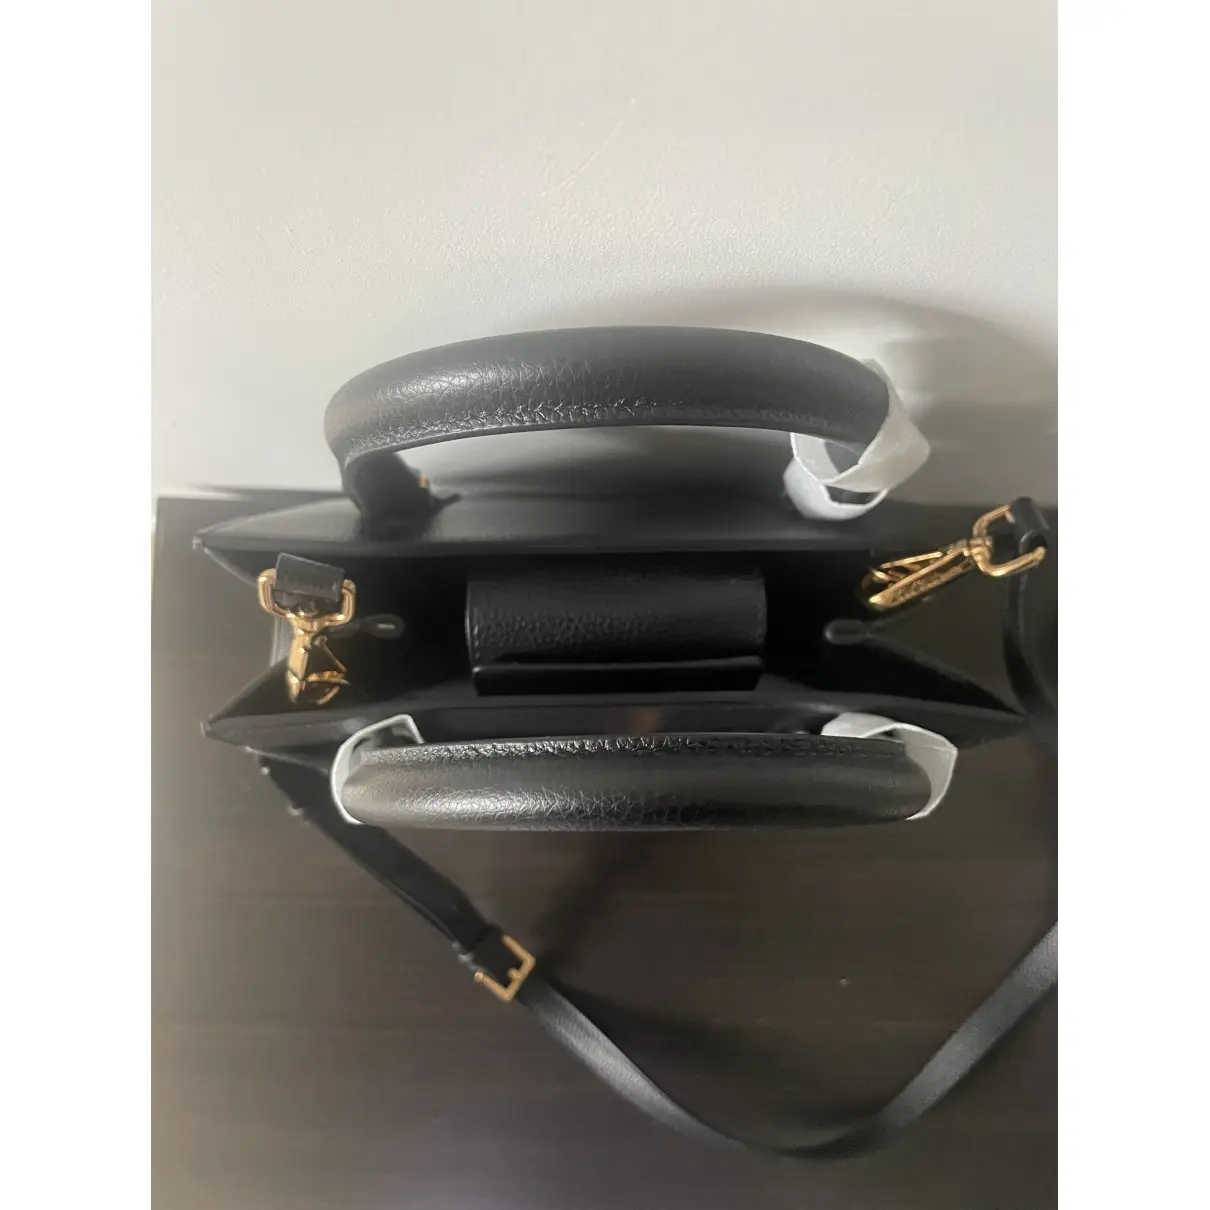 Virtus leather handbag Versace